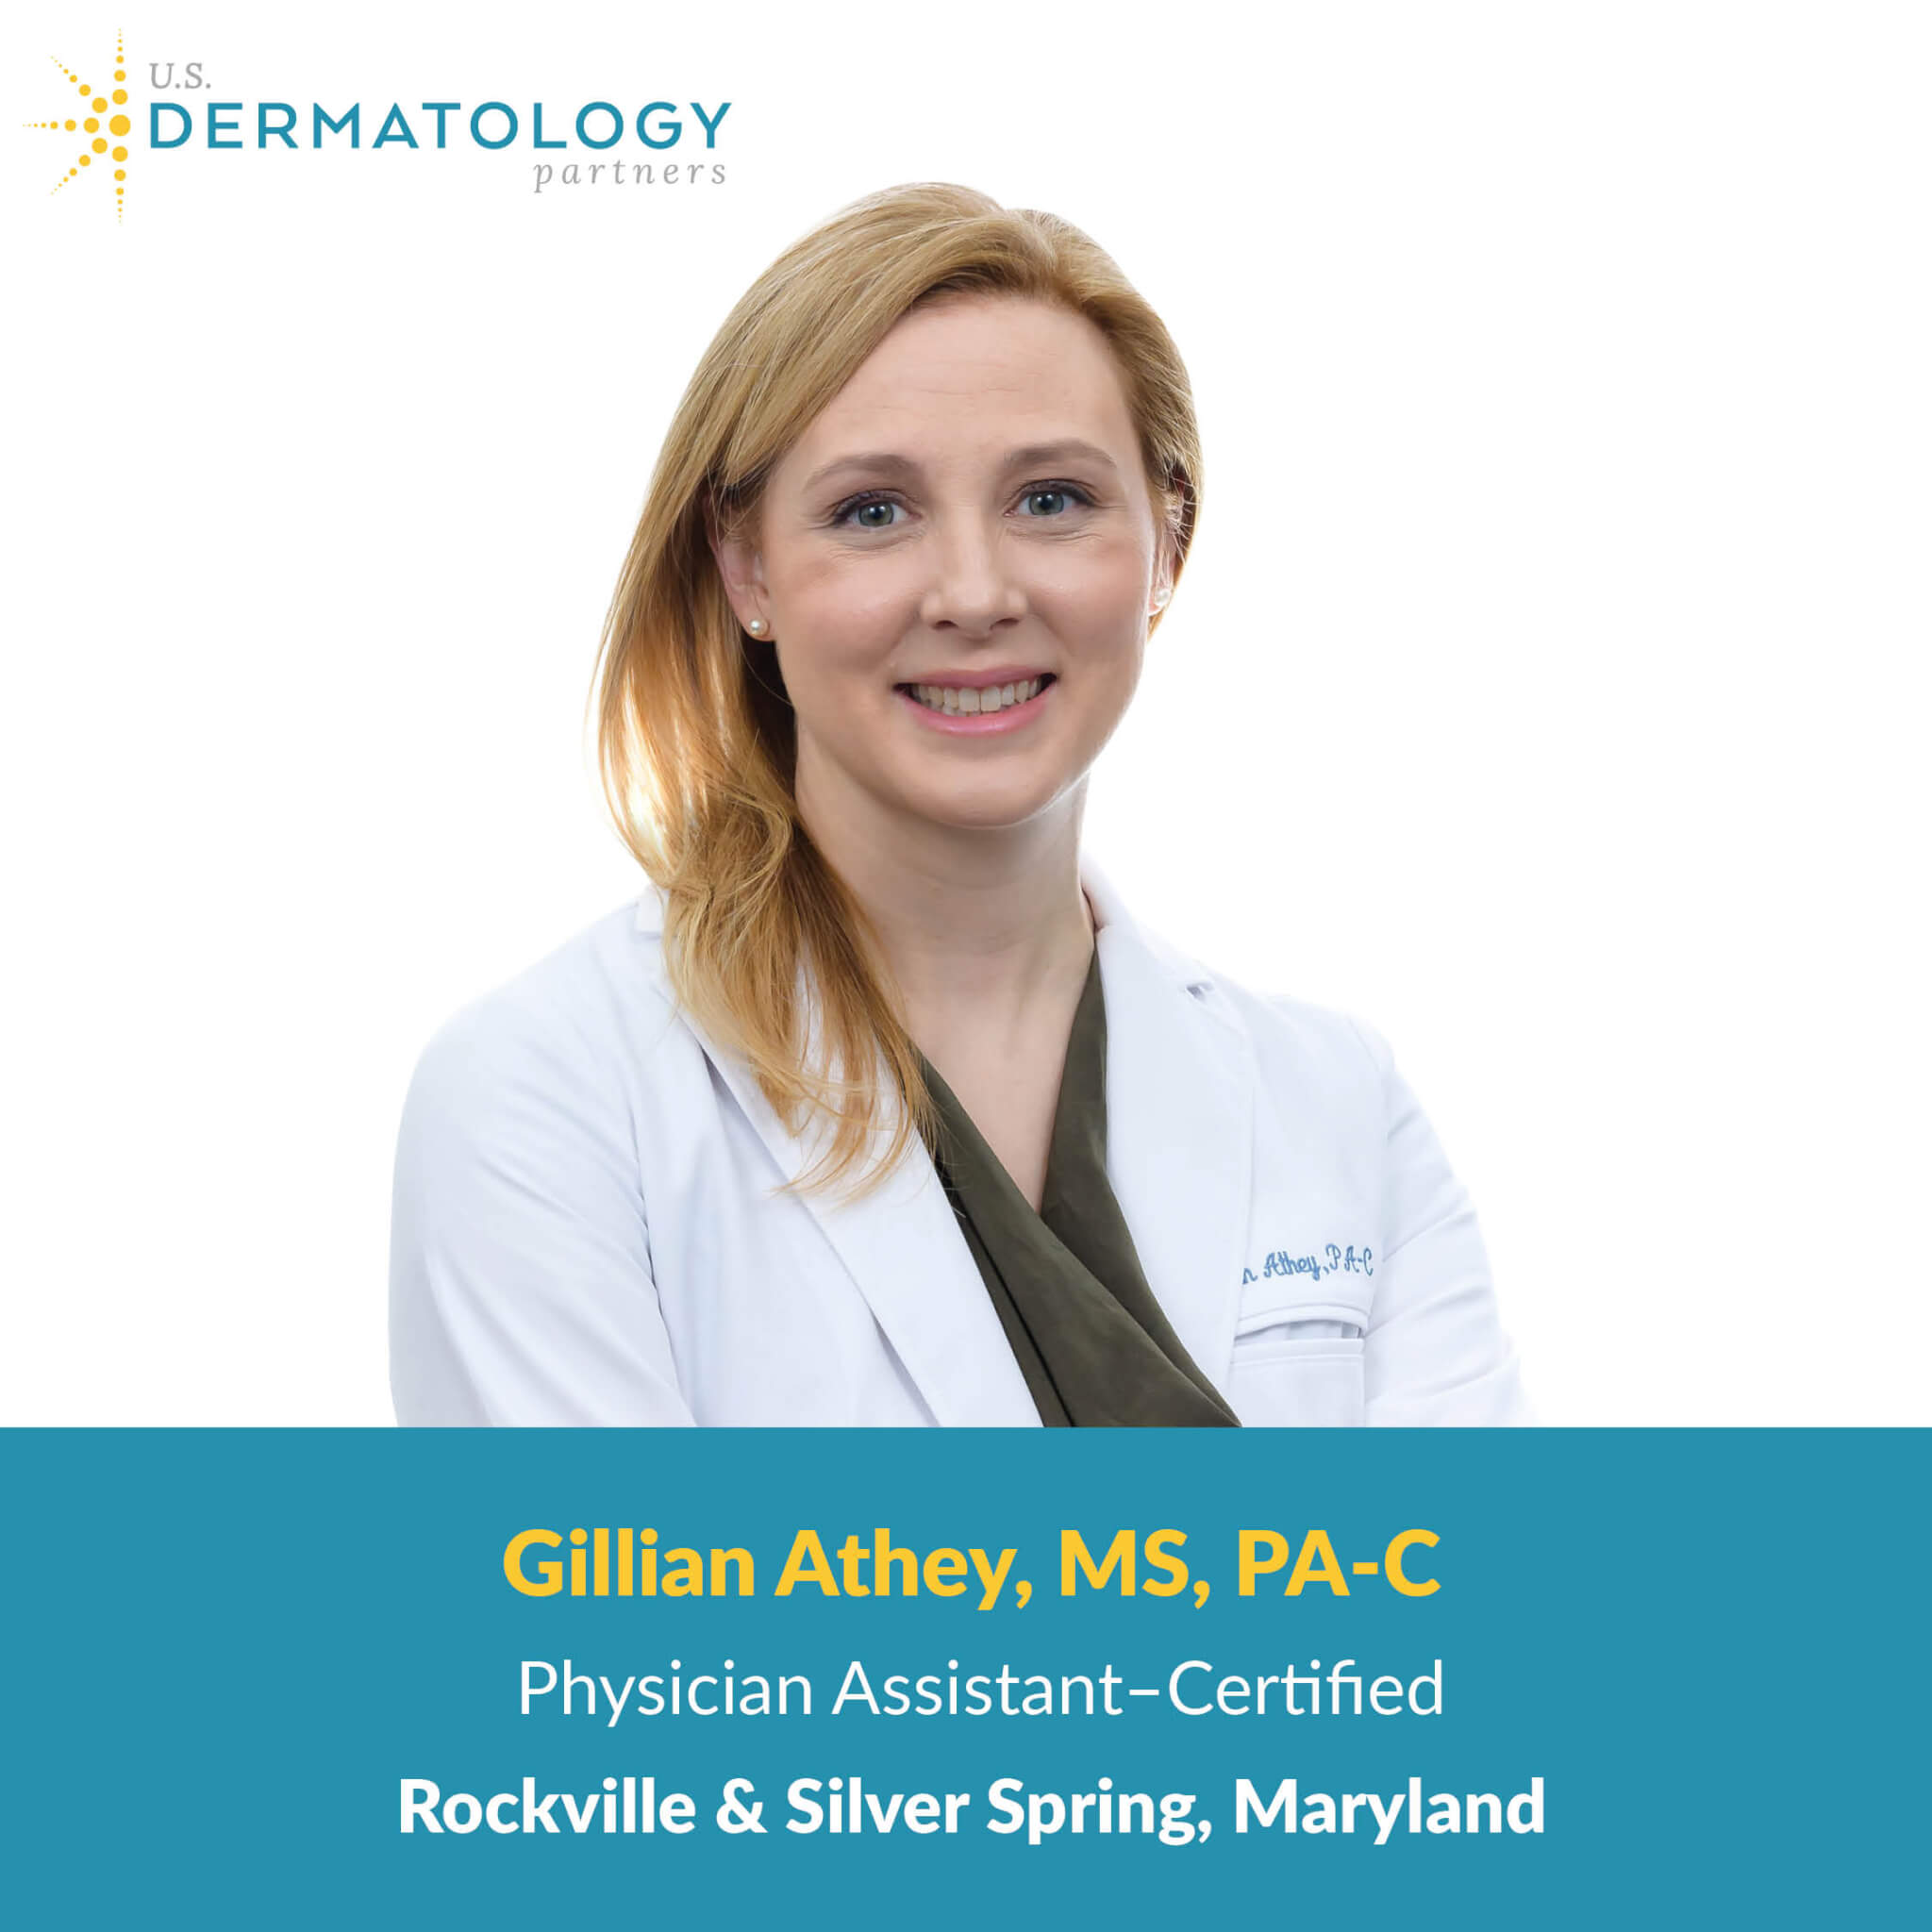 Welcome Gillian Athey, PA-C to Maryland | U.S. Dermatology Partners